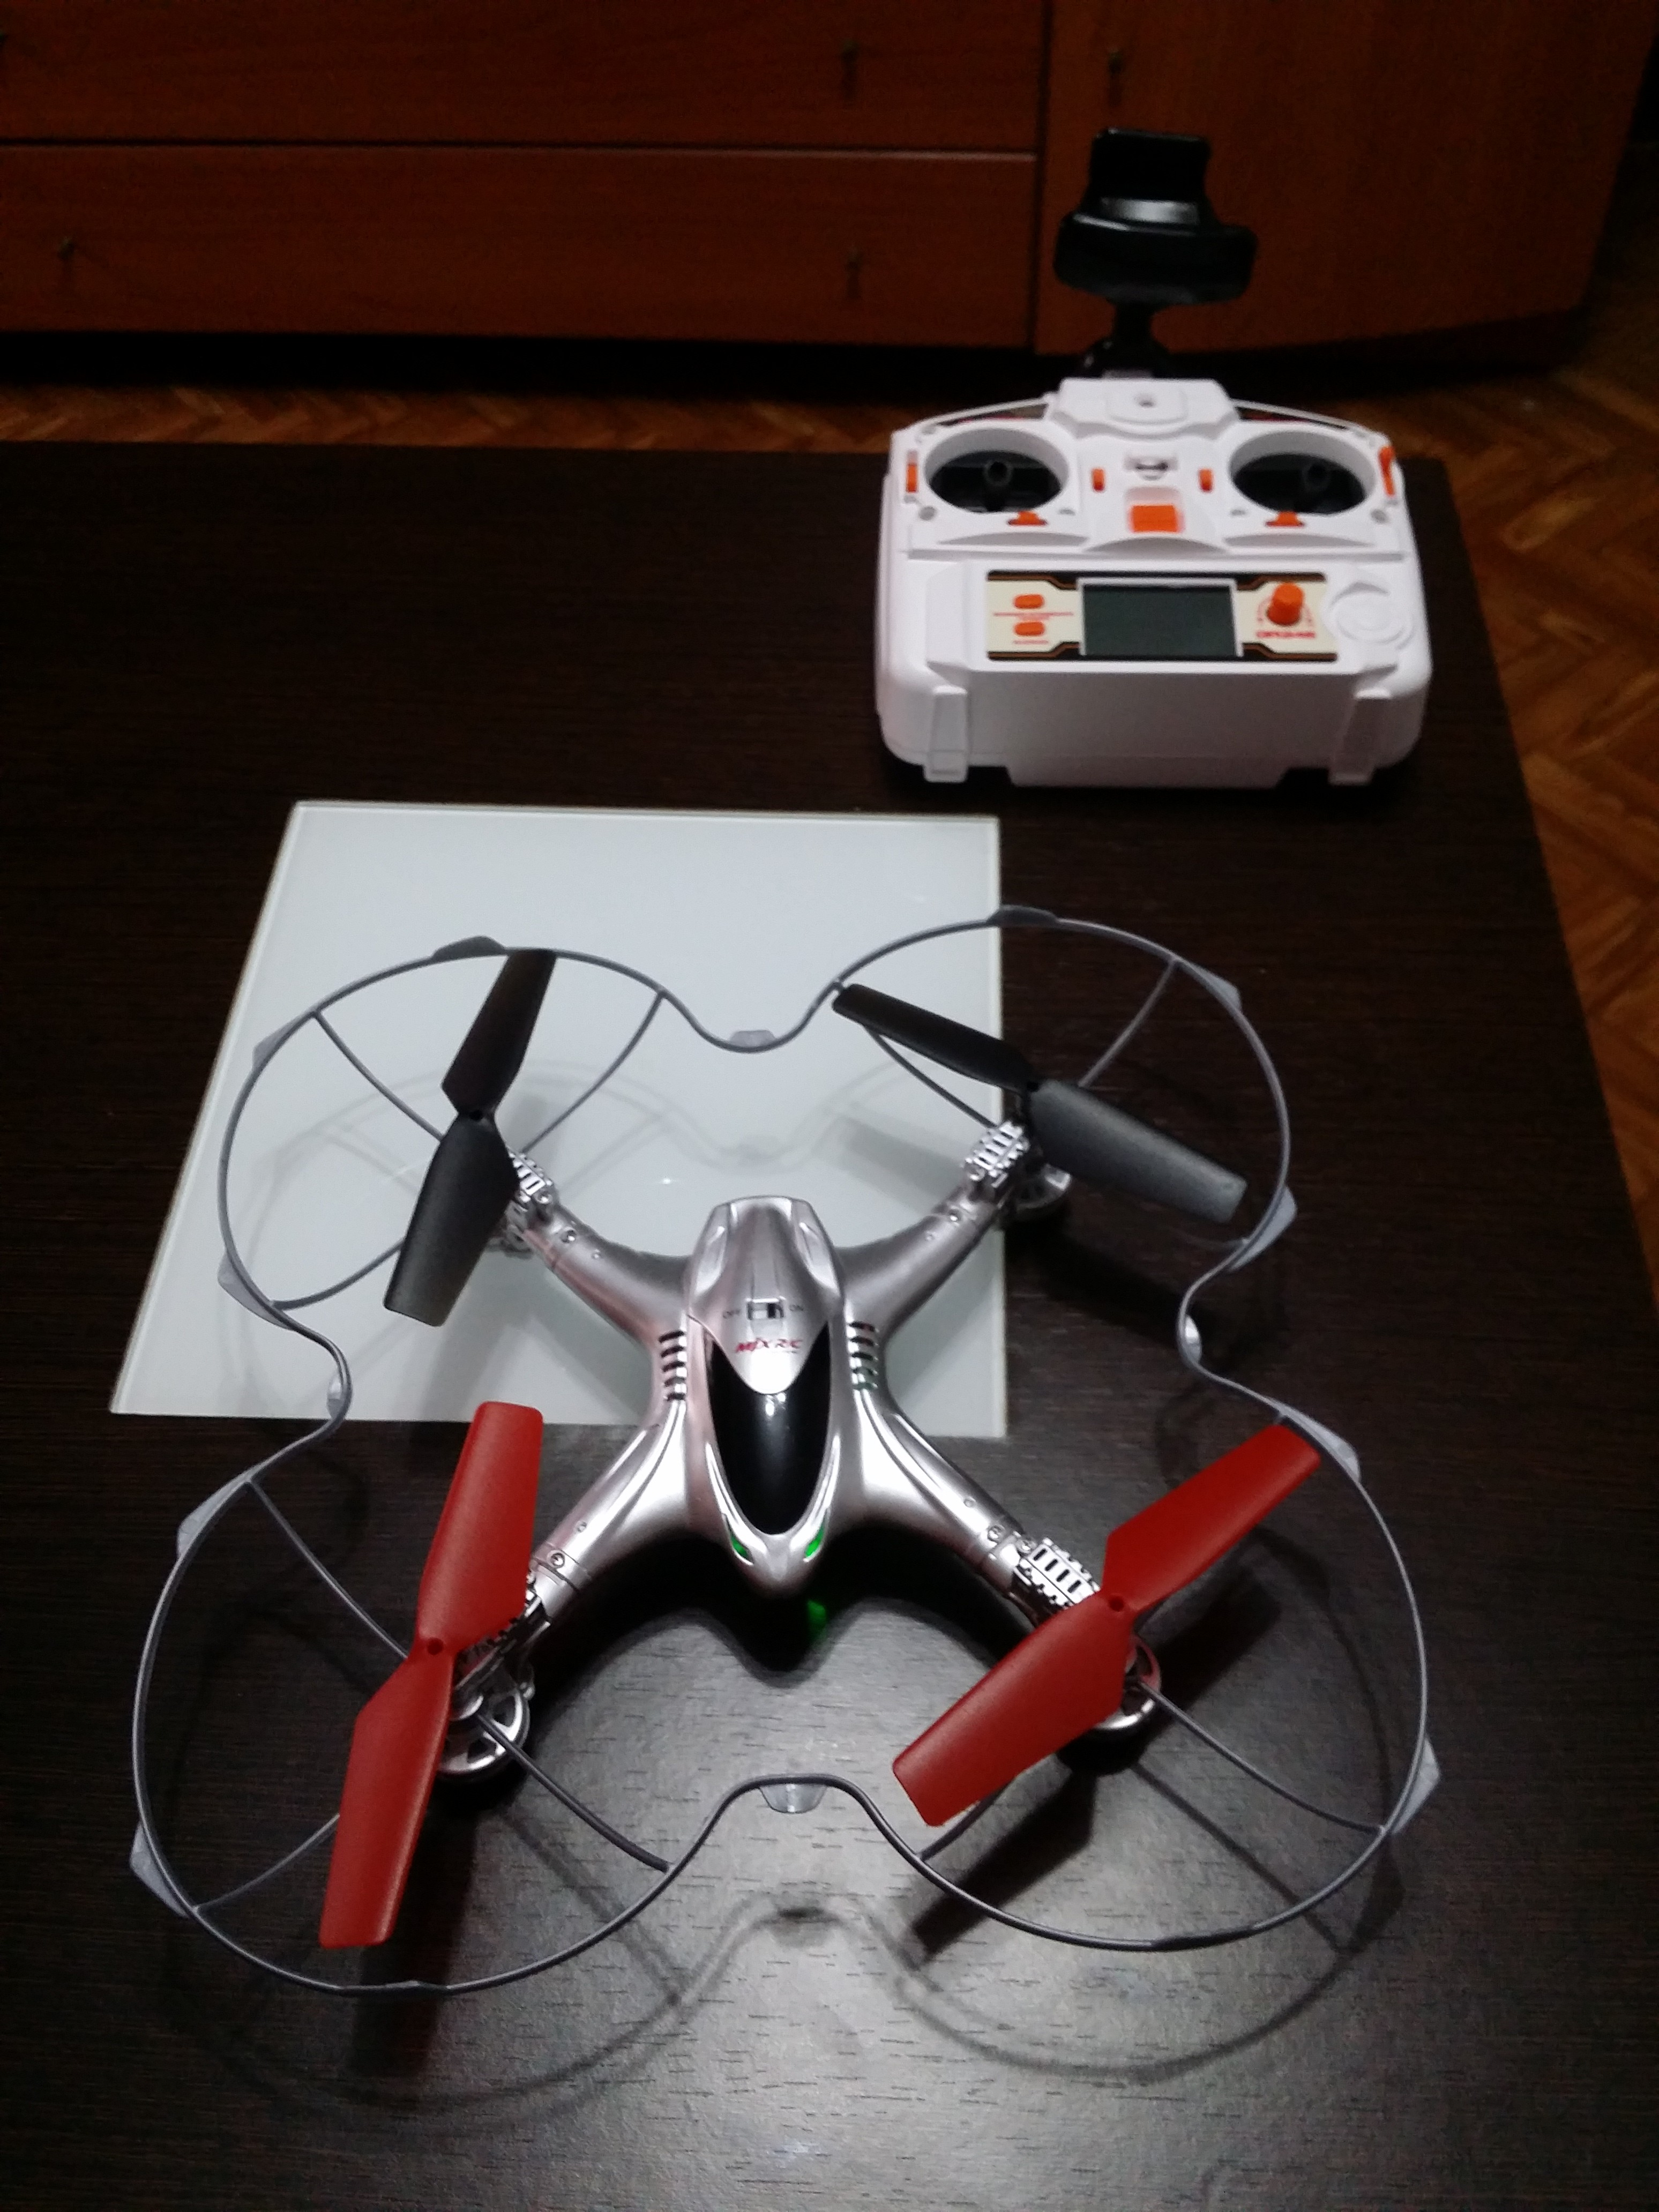 MJX un drone muy completo a un precio asequible.